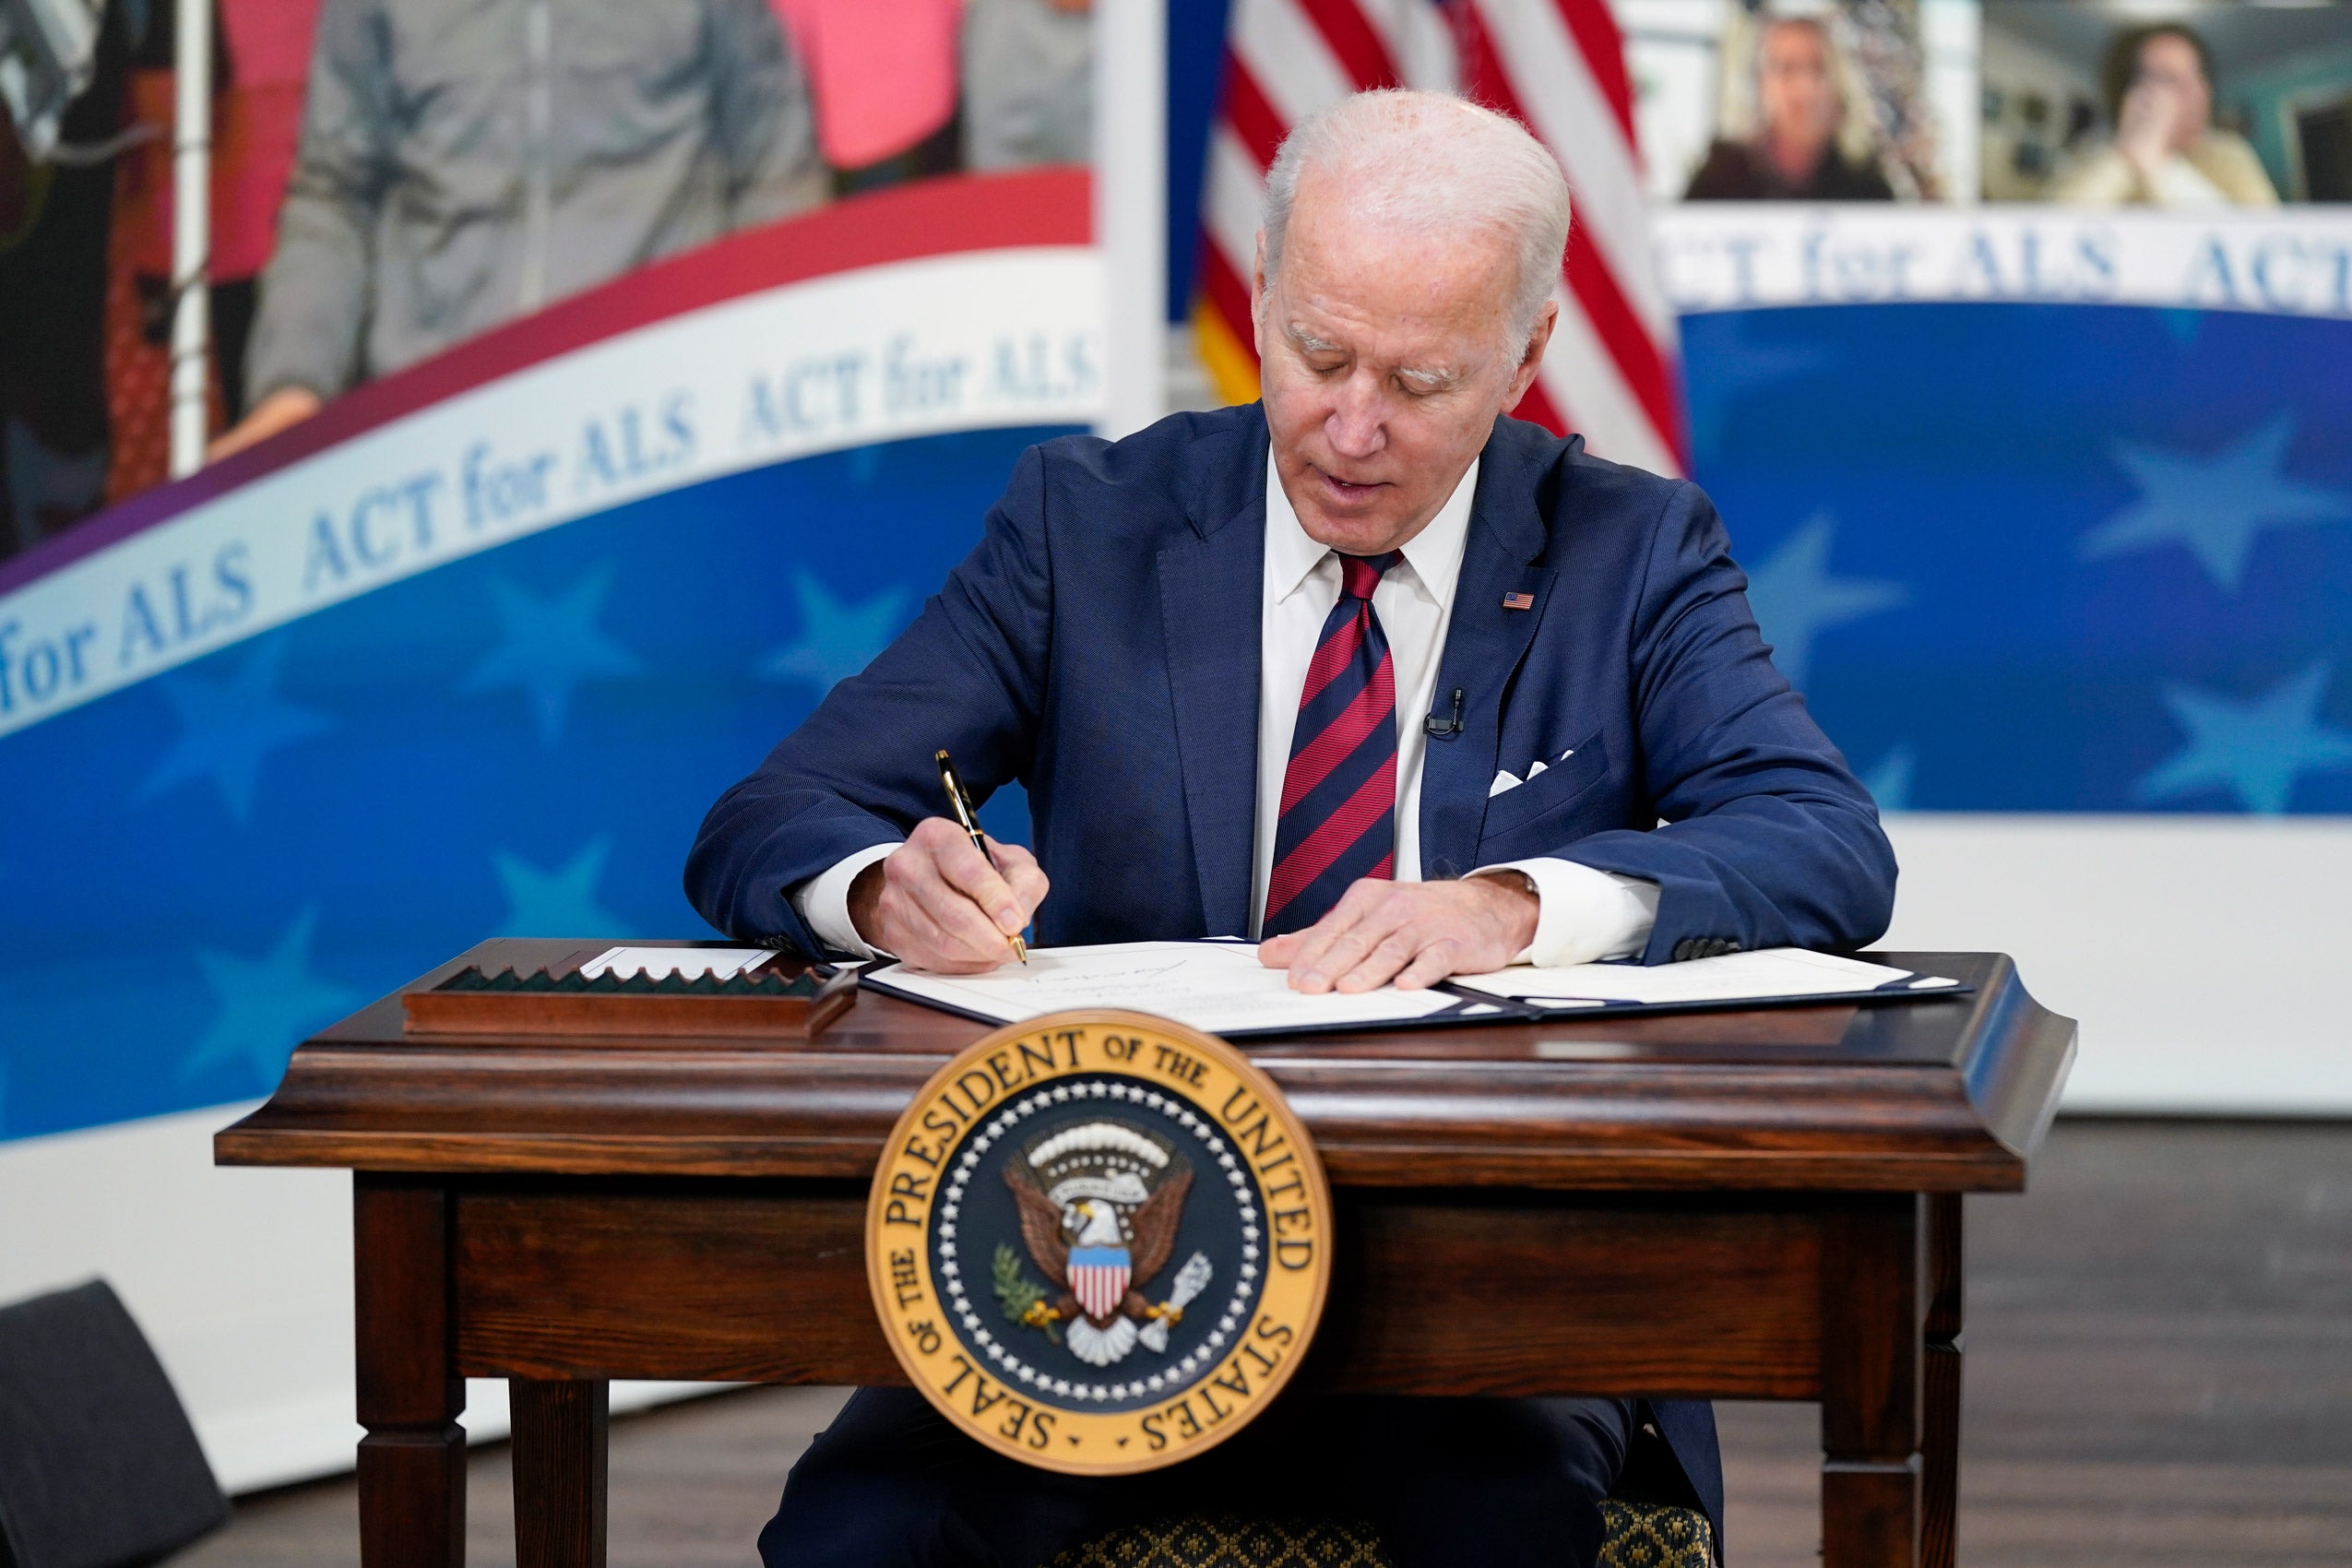 President Biden at a desk signing a document.